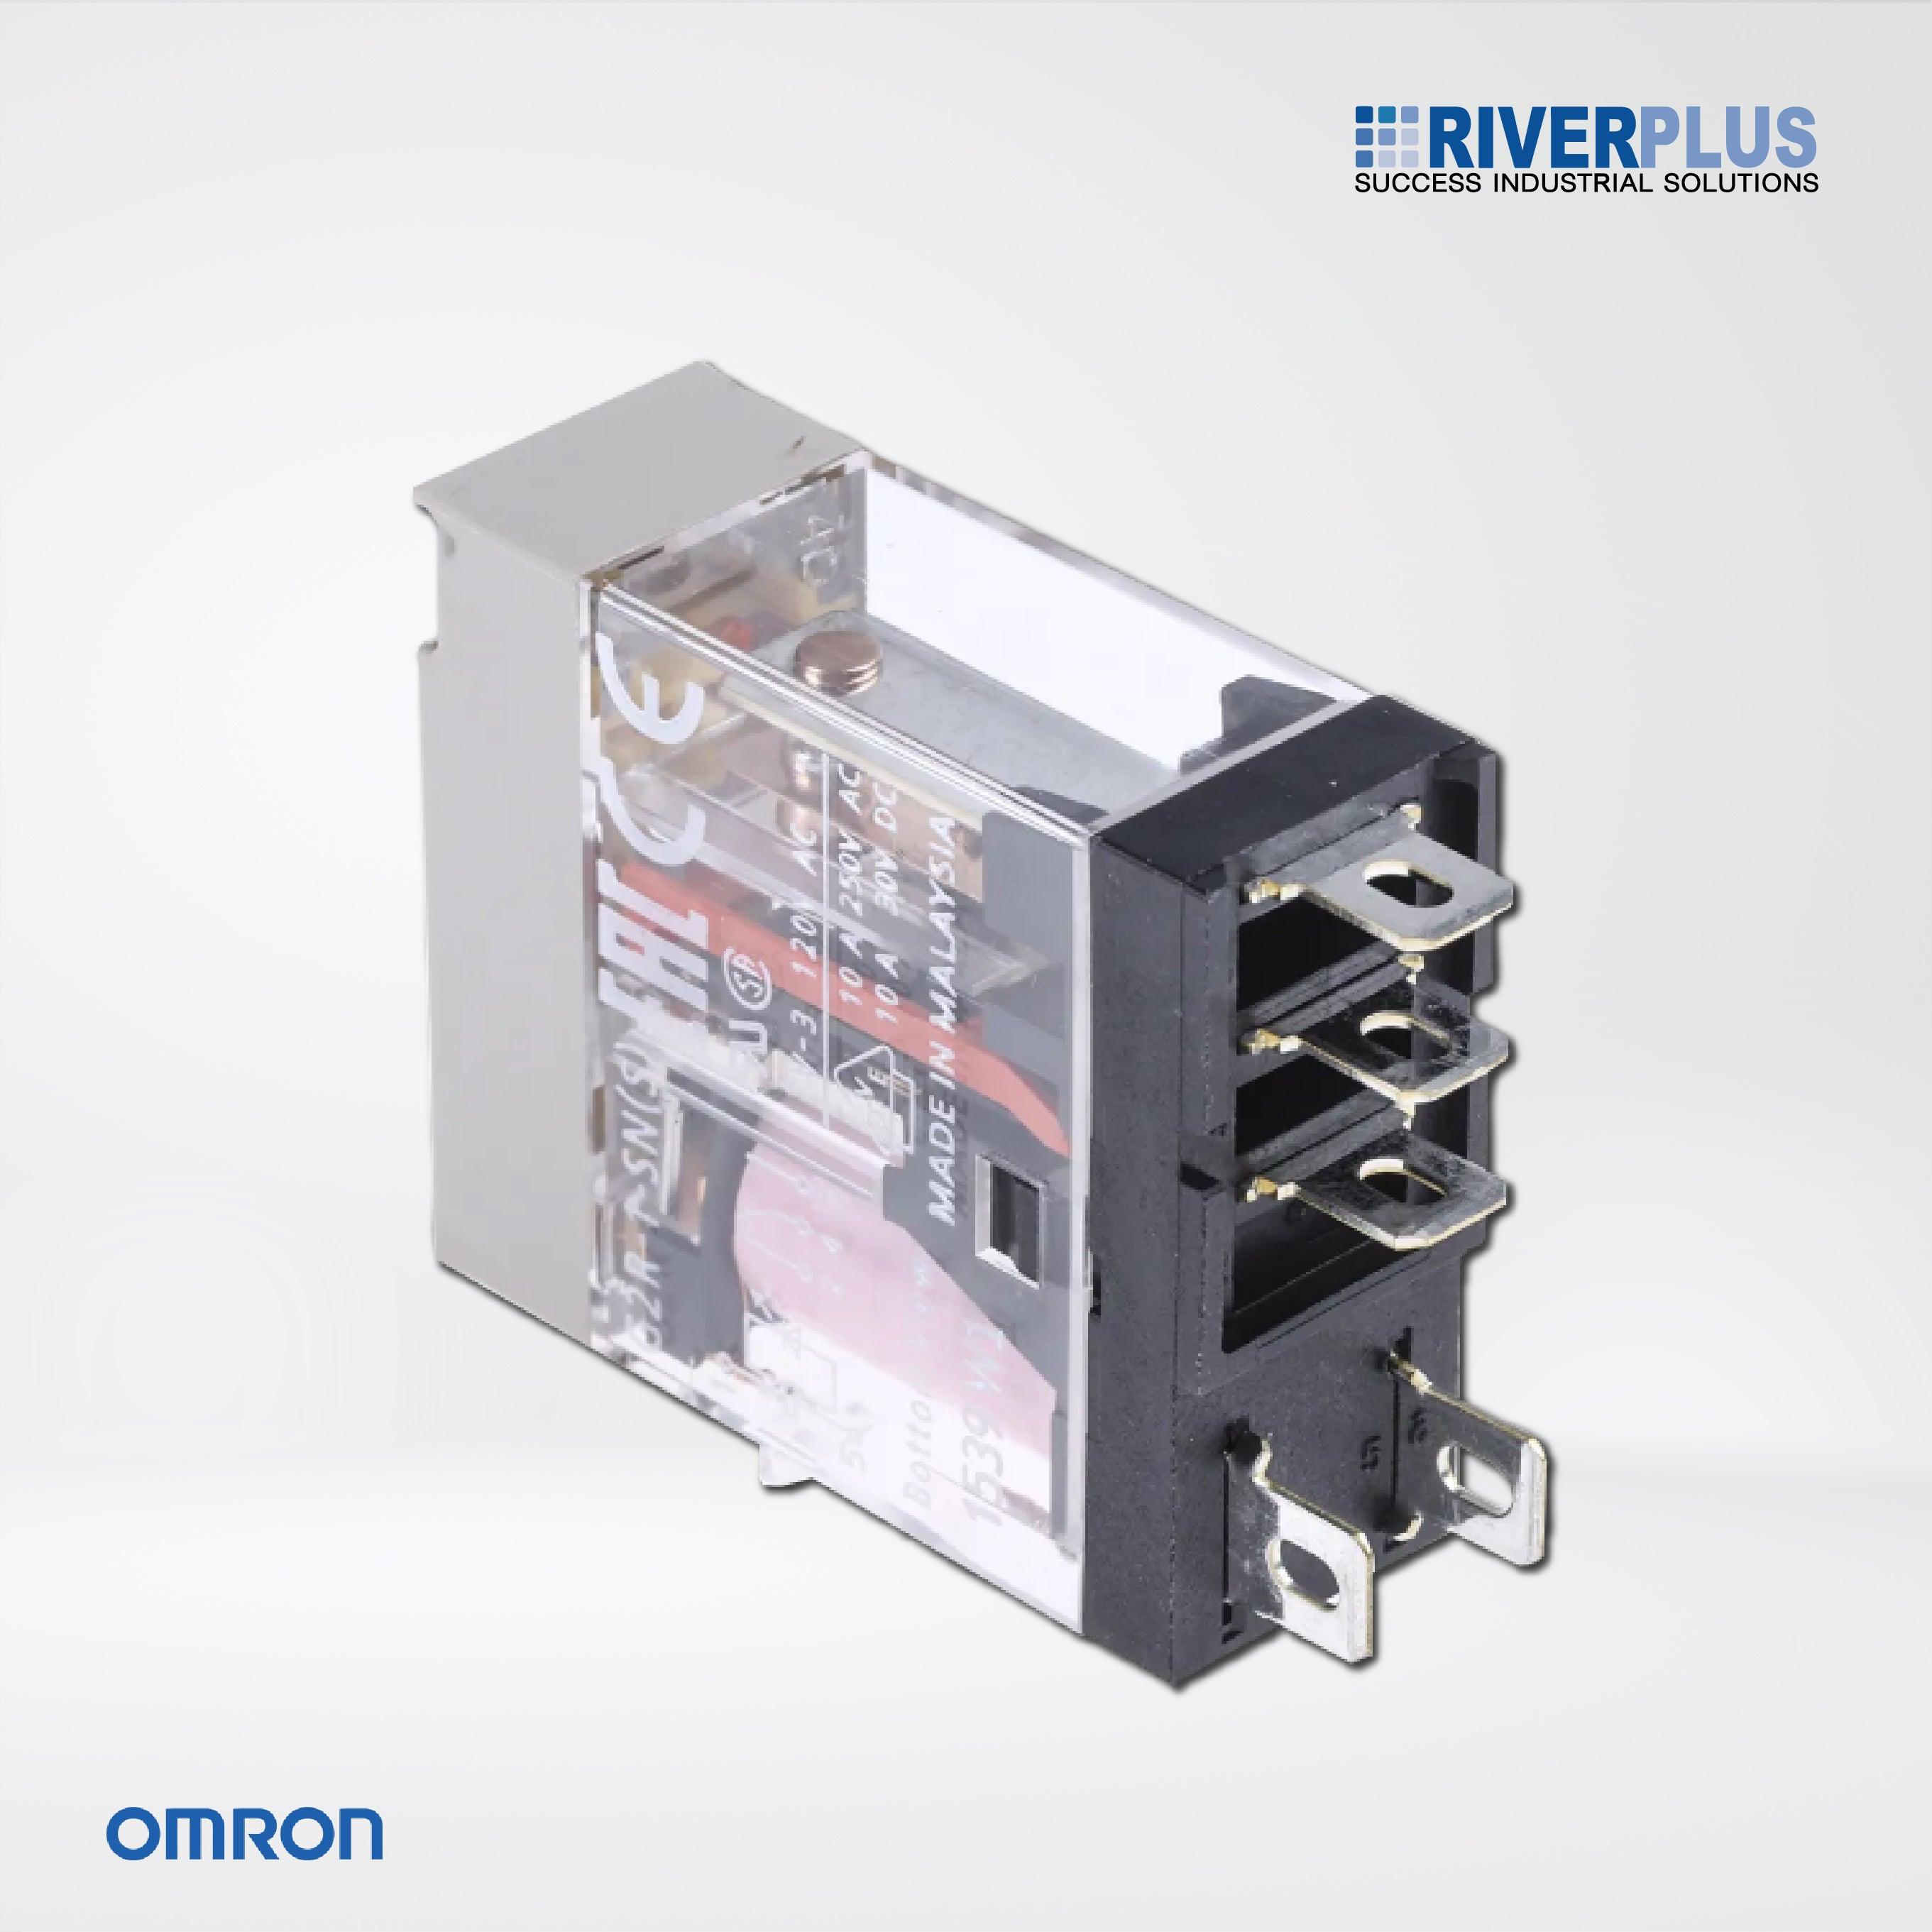 G2R-1-SN AC110(S) BY OMB Relay, plug-in, 5-pin, SPDT, 10 A, mech & LED indicators, label facility - Riverplus